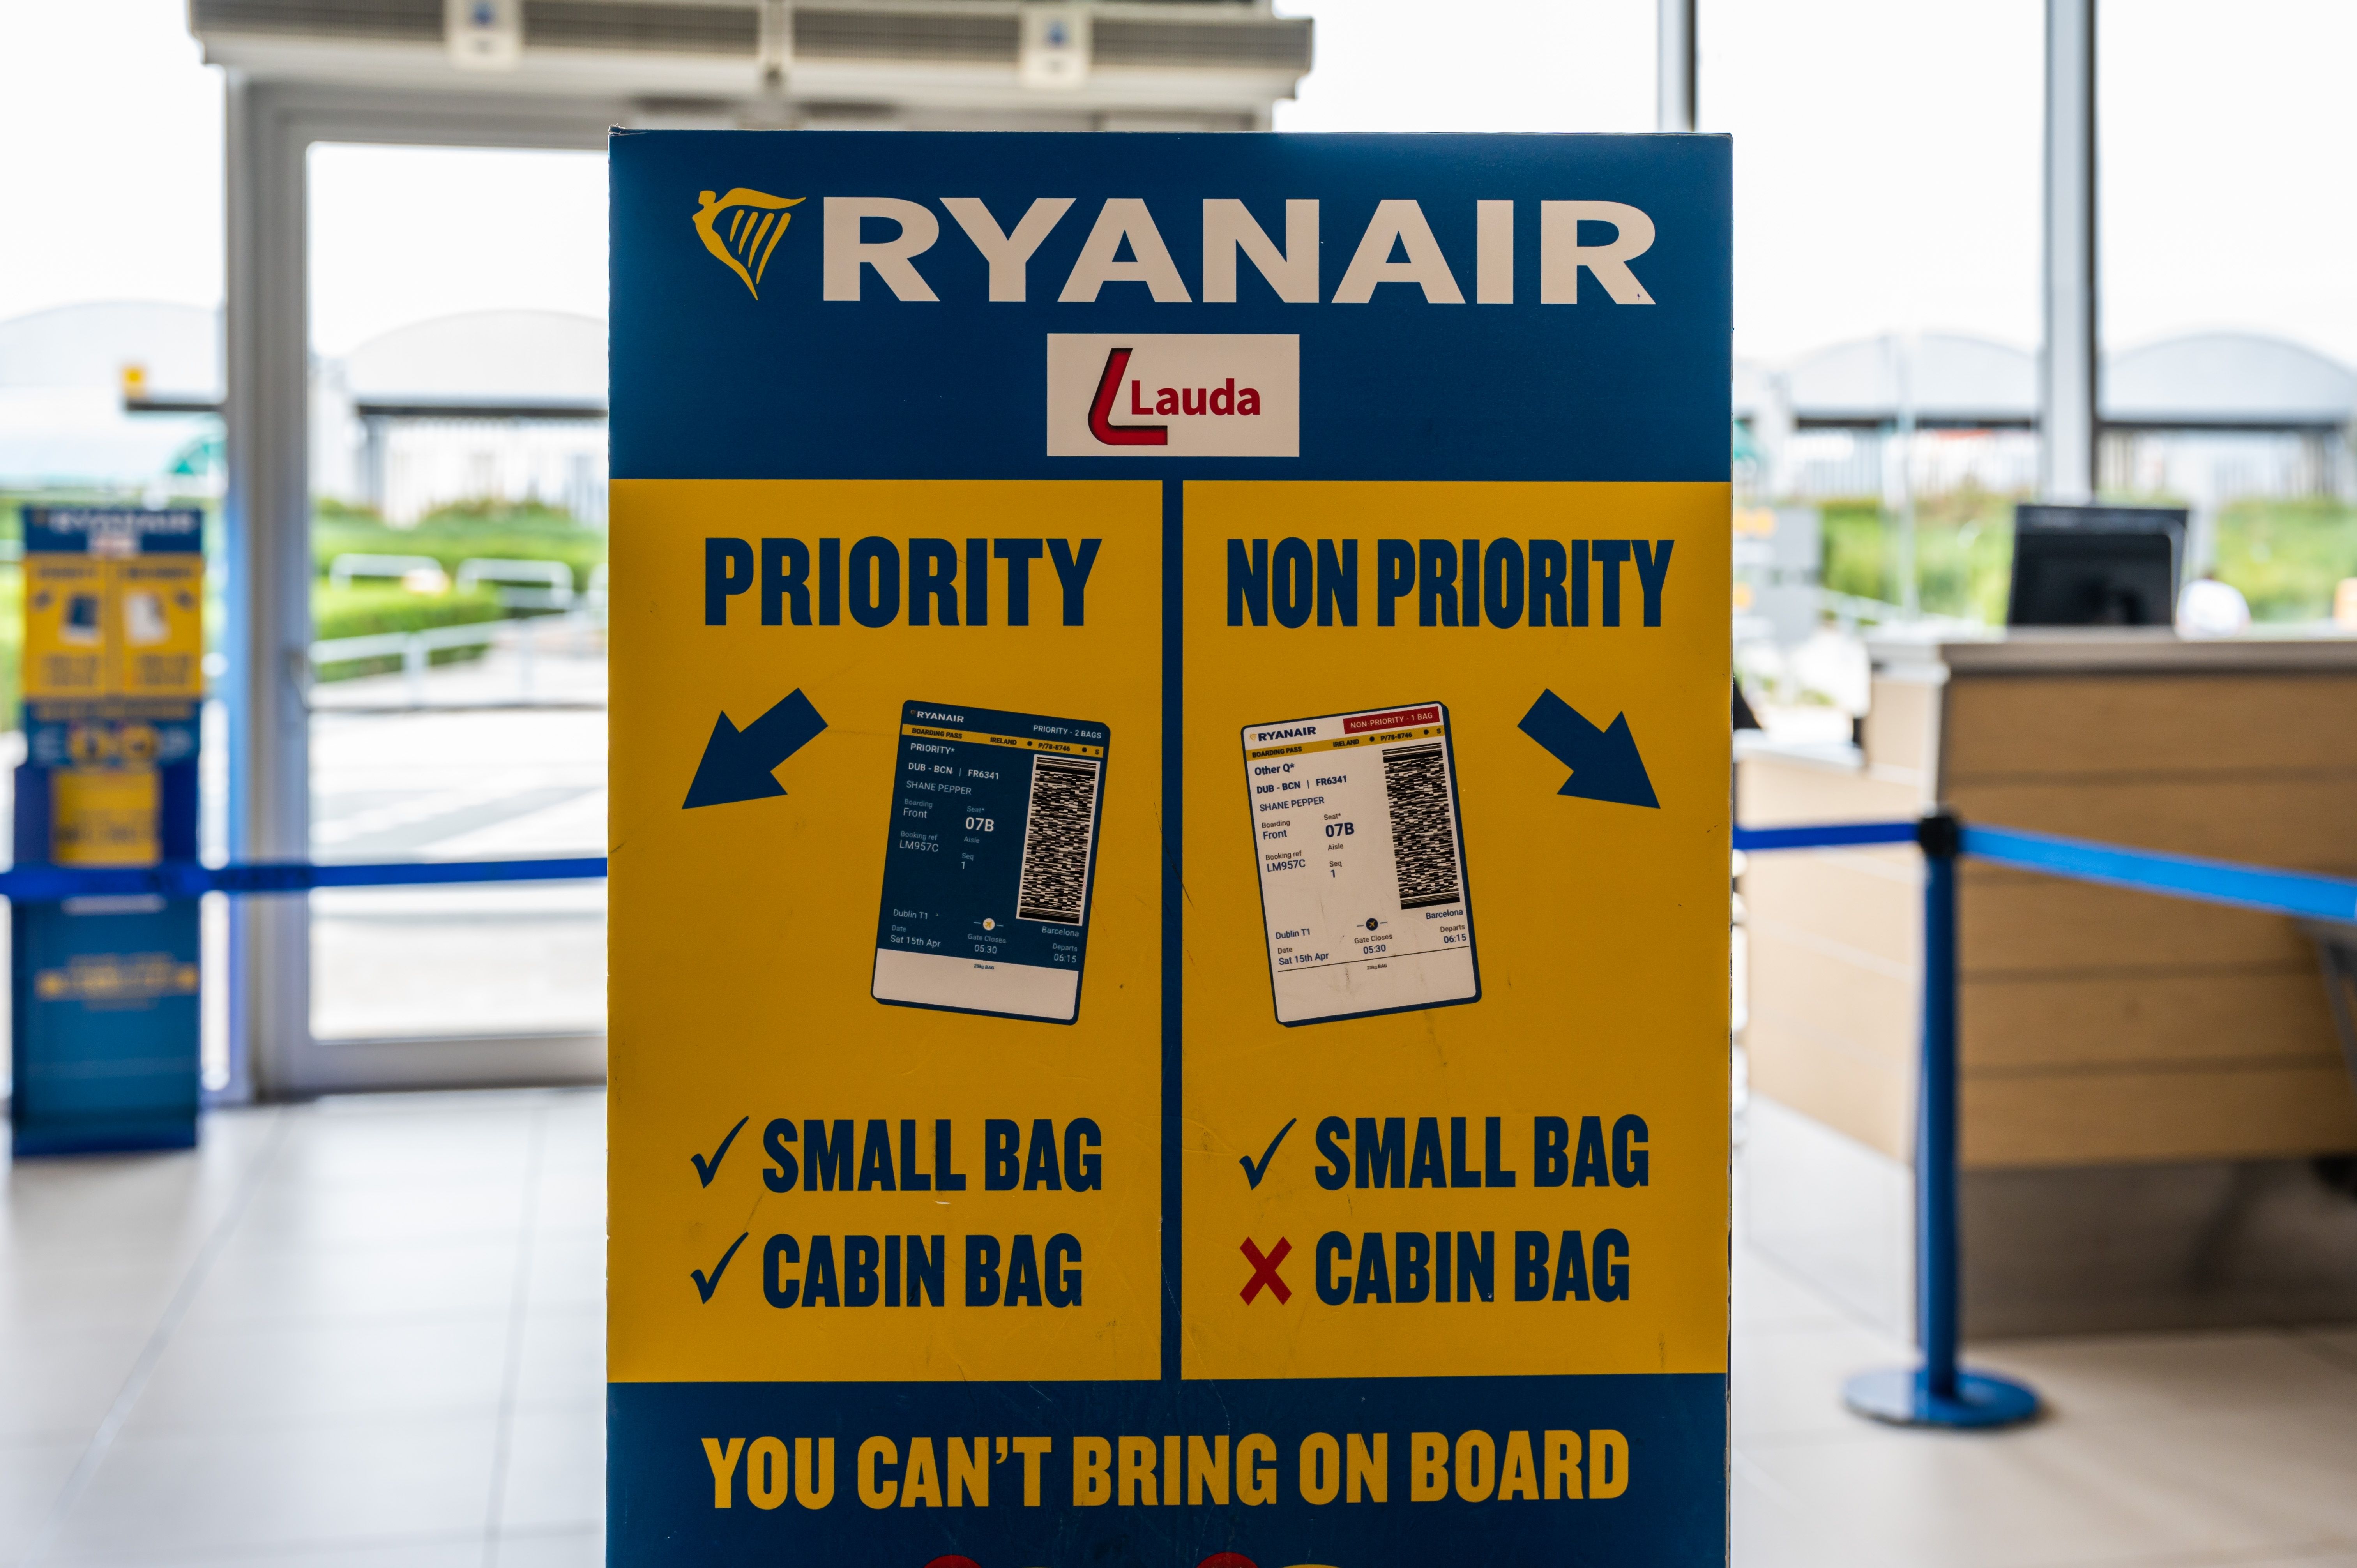 A Photo showing Ryanair's priority boarding queue sign.